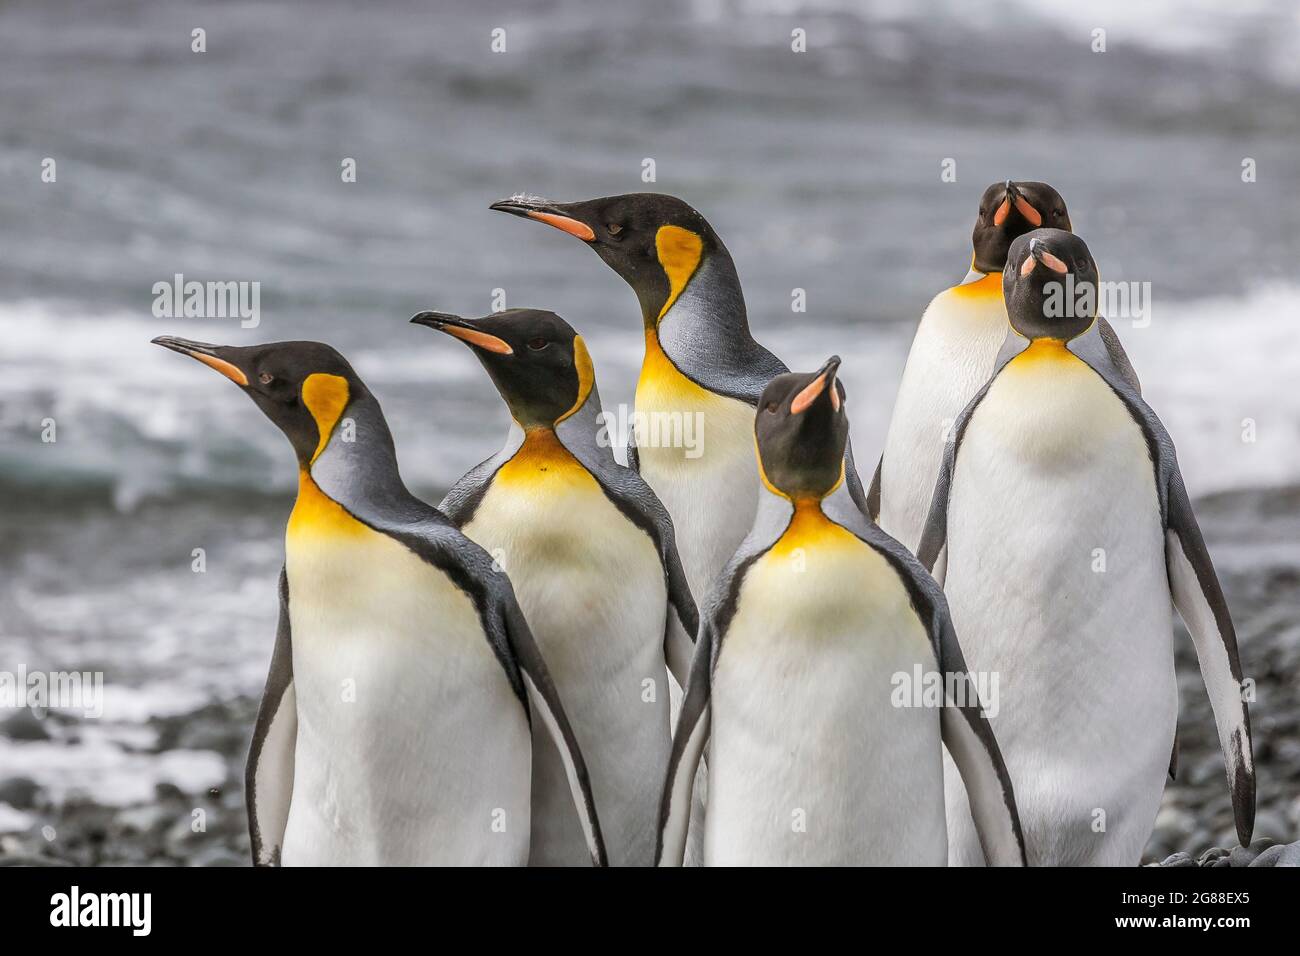 Re Pinguini (Atenodytes patagonicus), Isola di Macquarie. Foto Stock